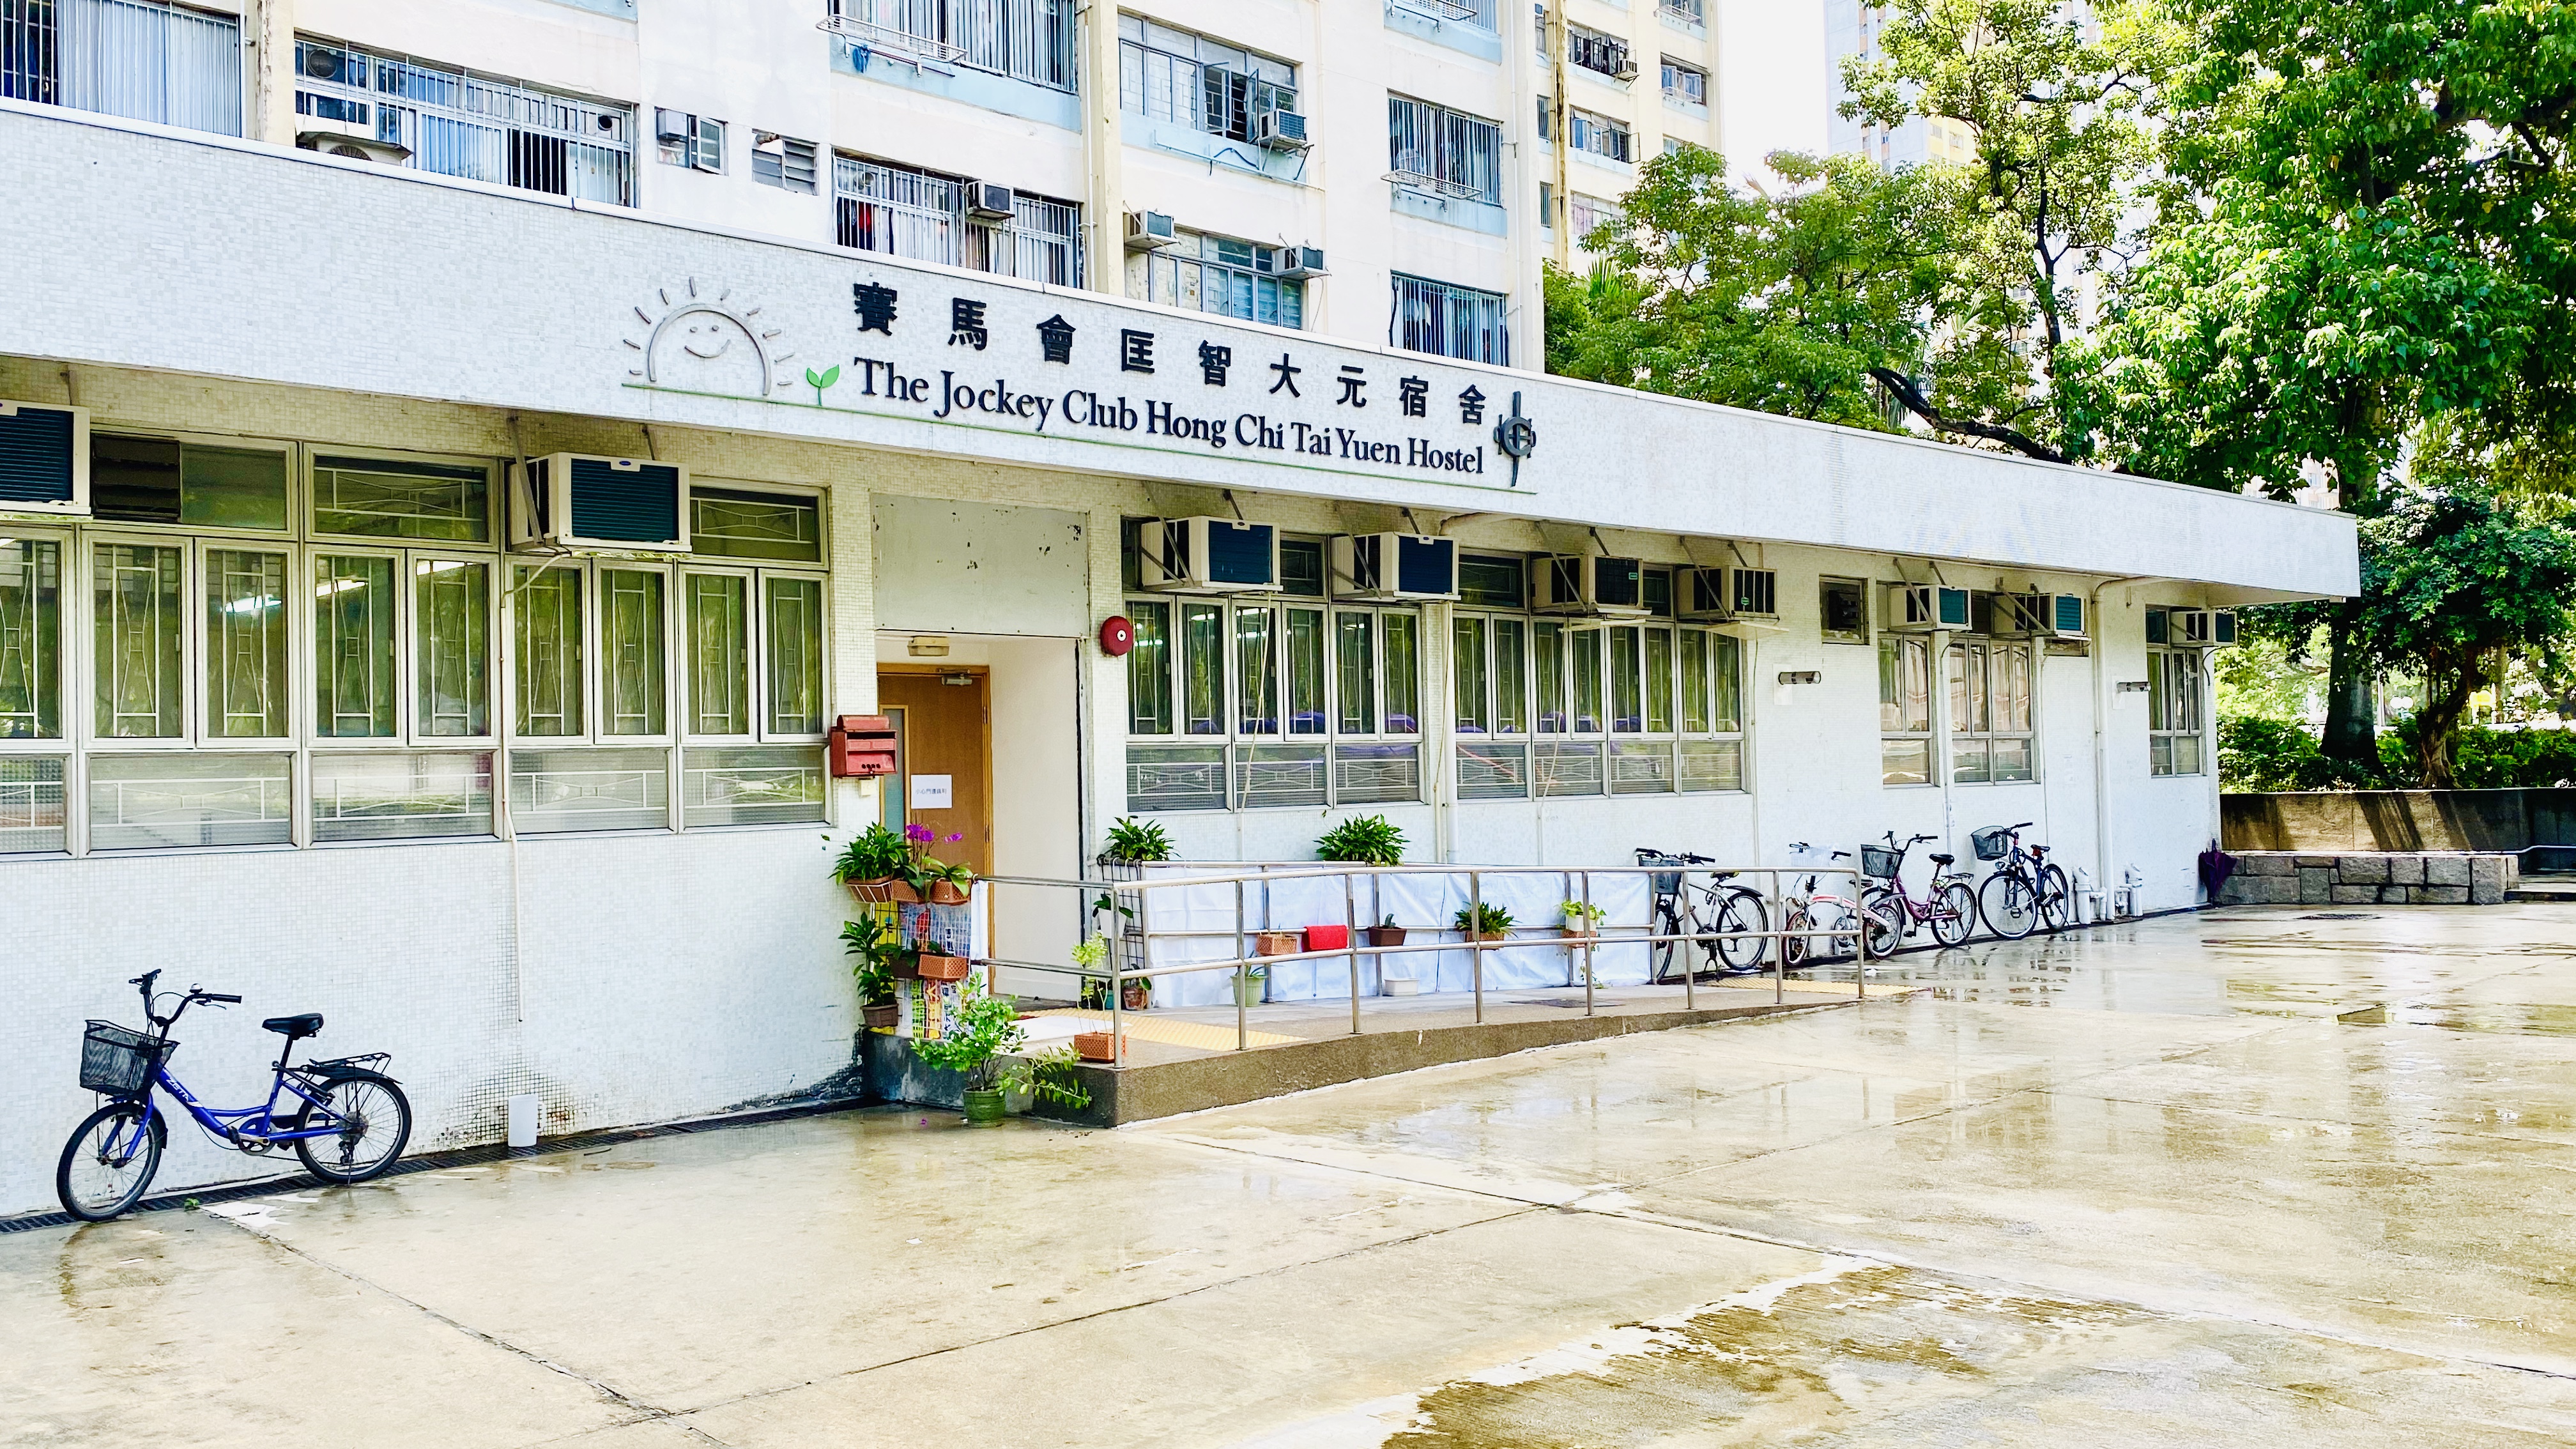 The Jockey Club Hong Chi Tai Yuen Hostel